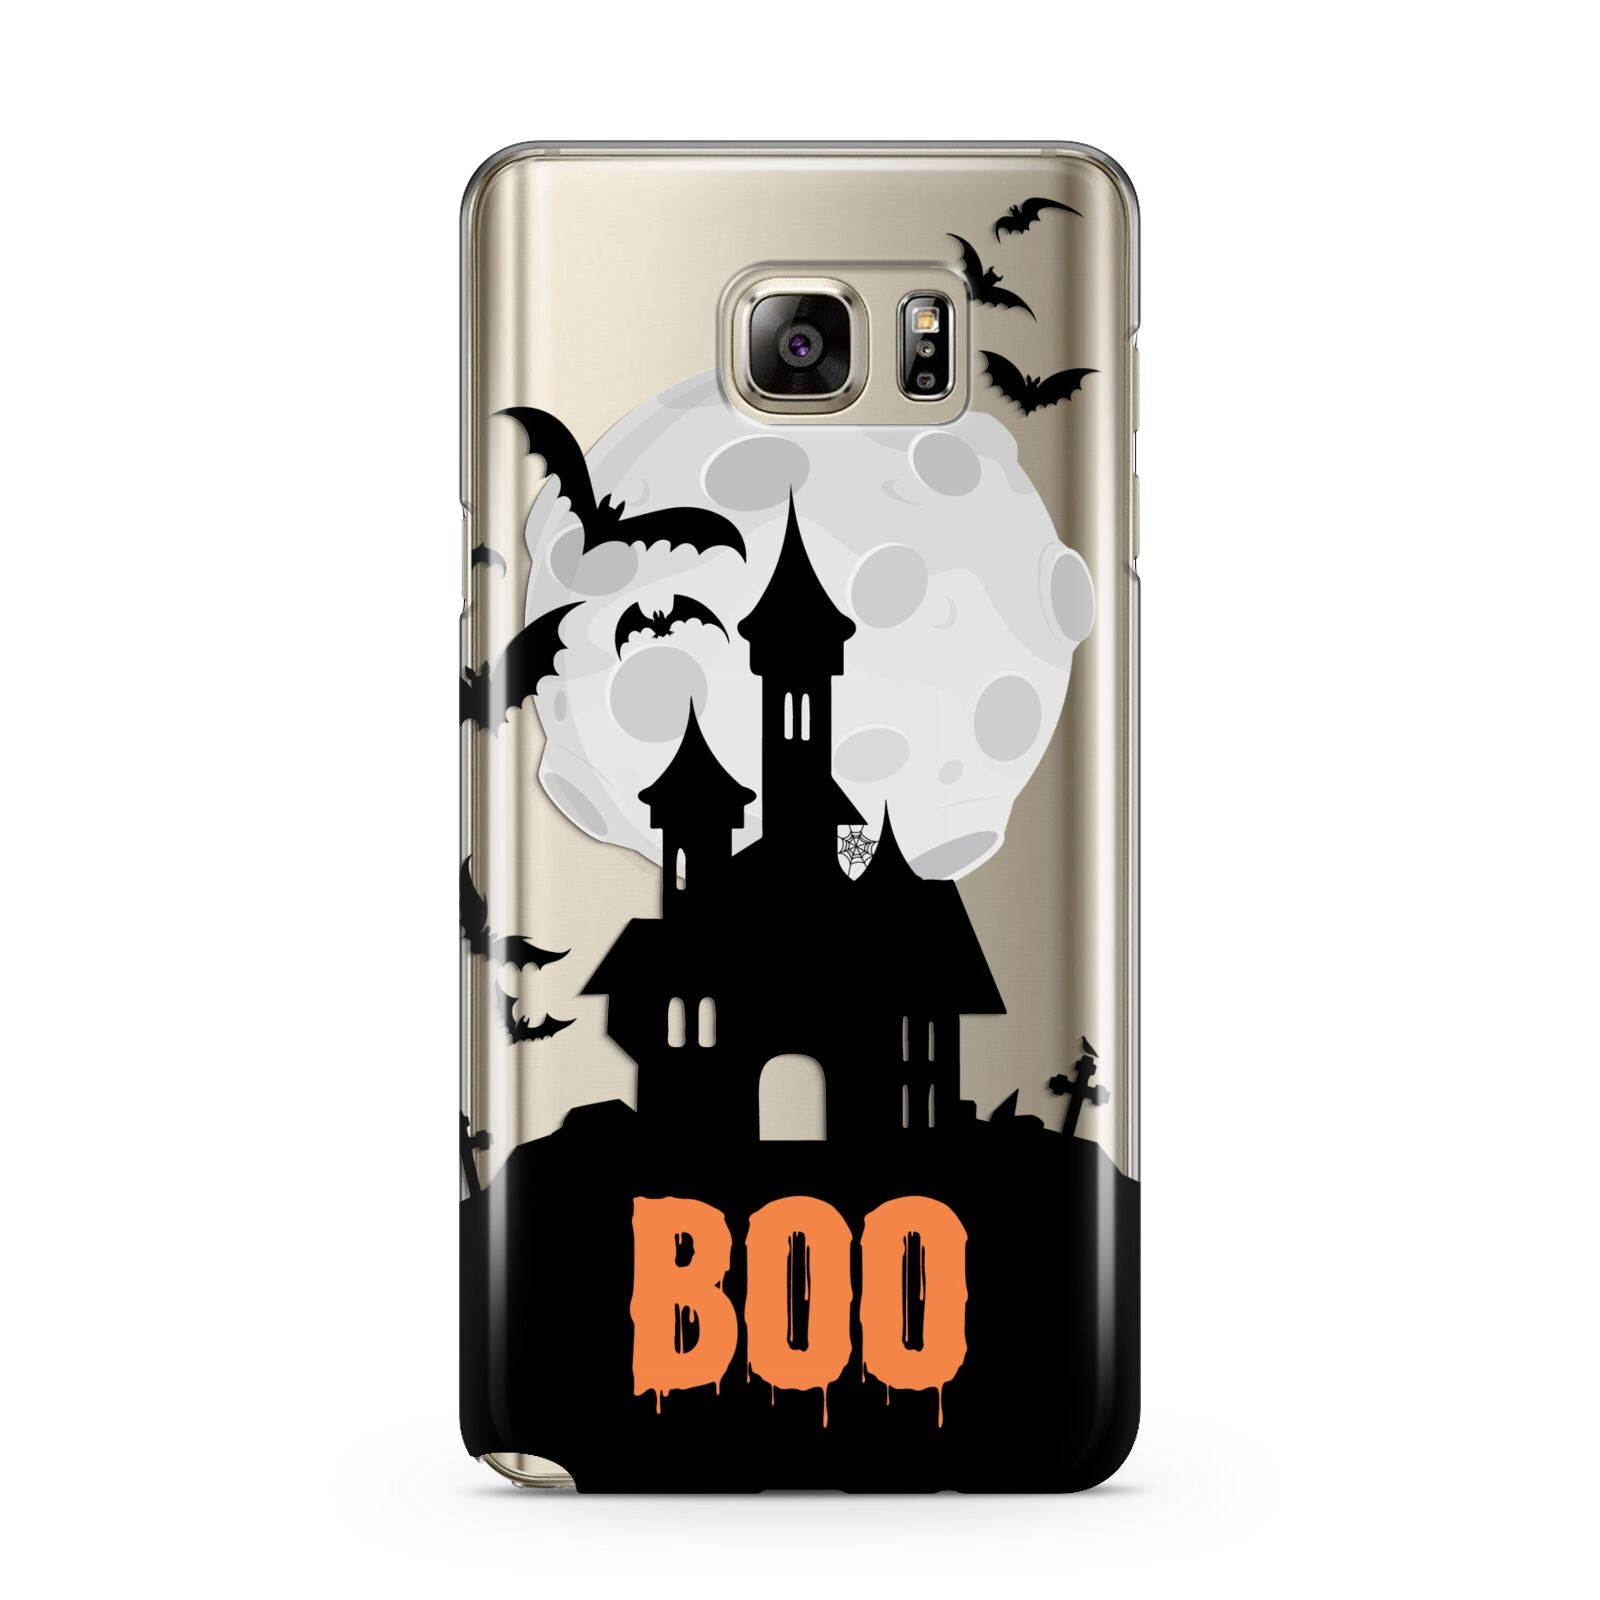 Boo Gothic Black Halloween Samsung Galaxy Note 5 Case